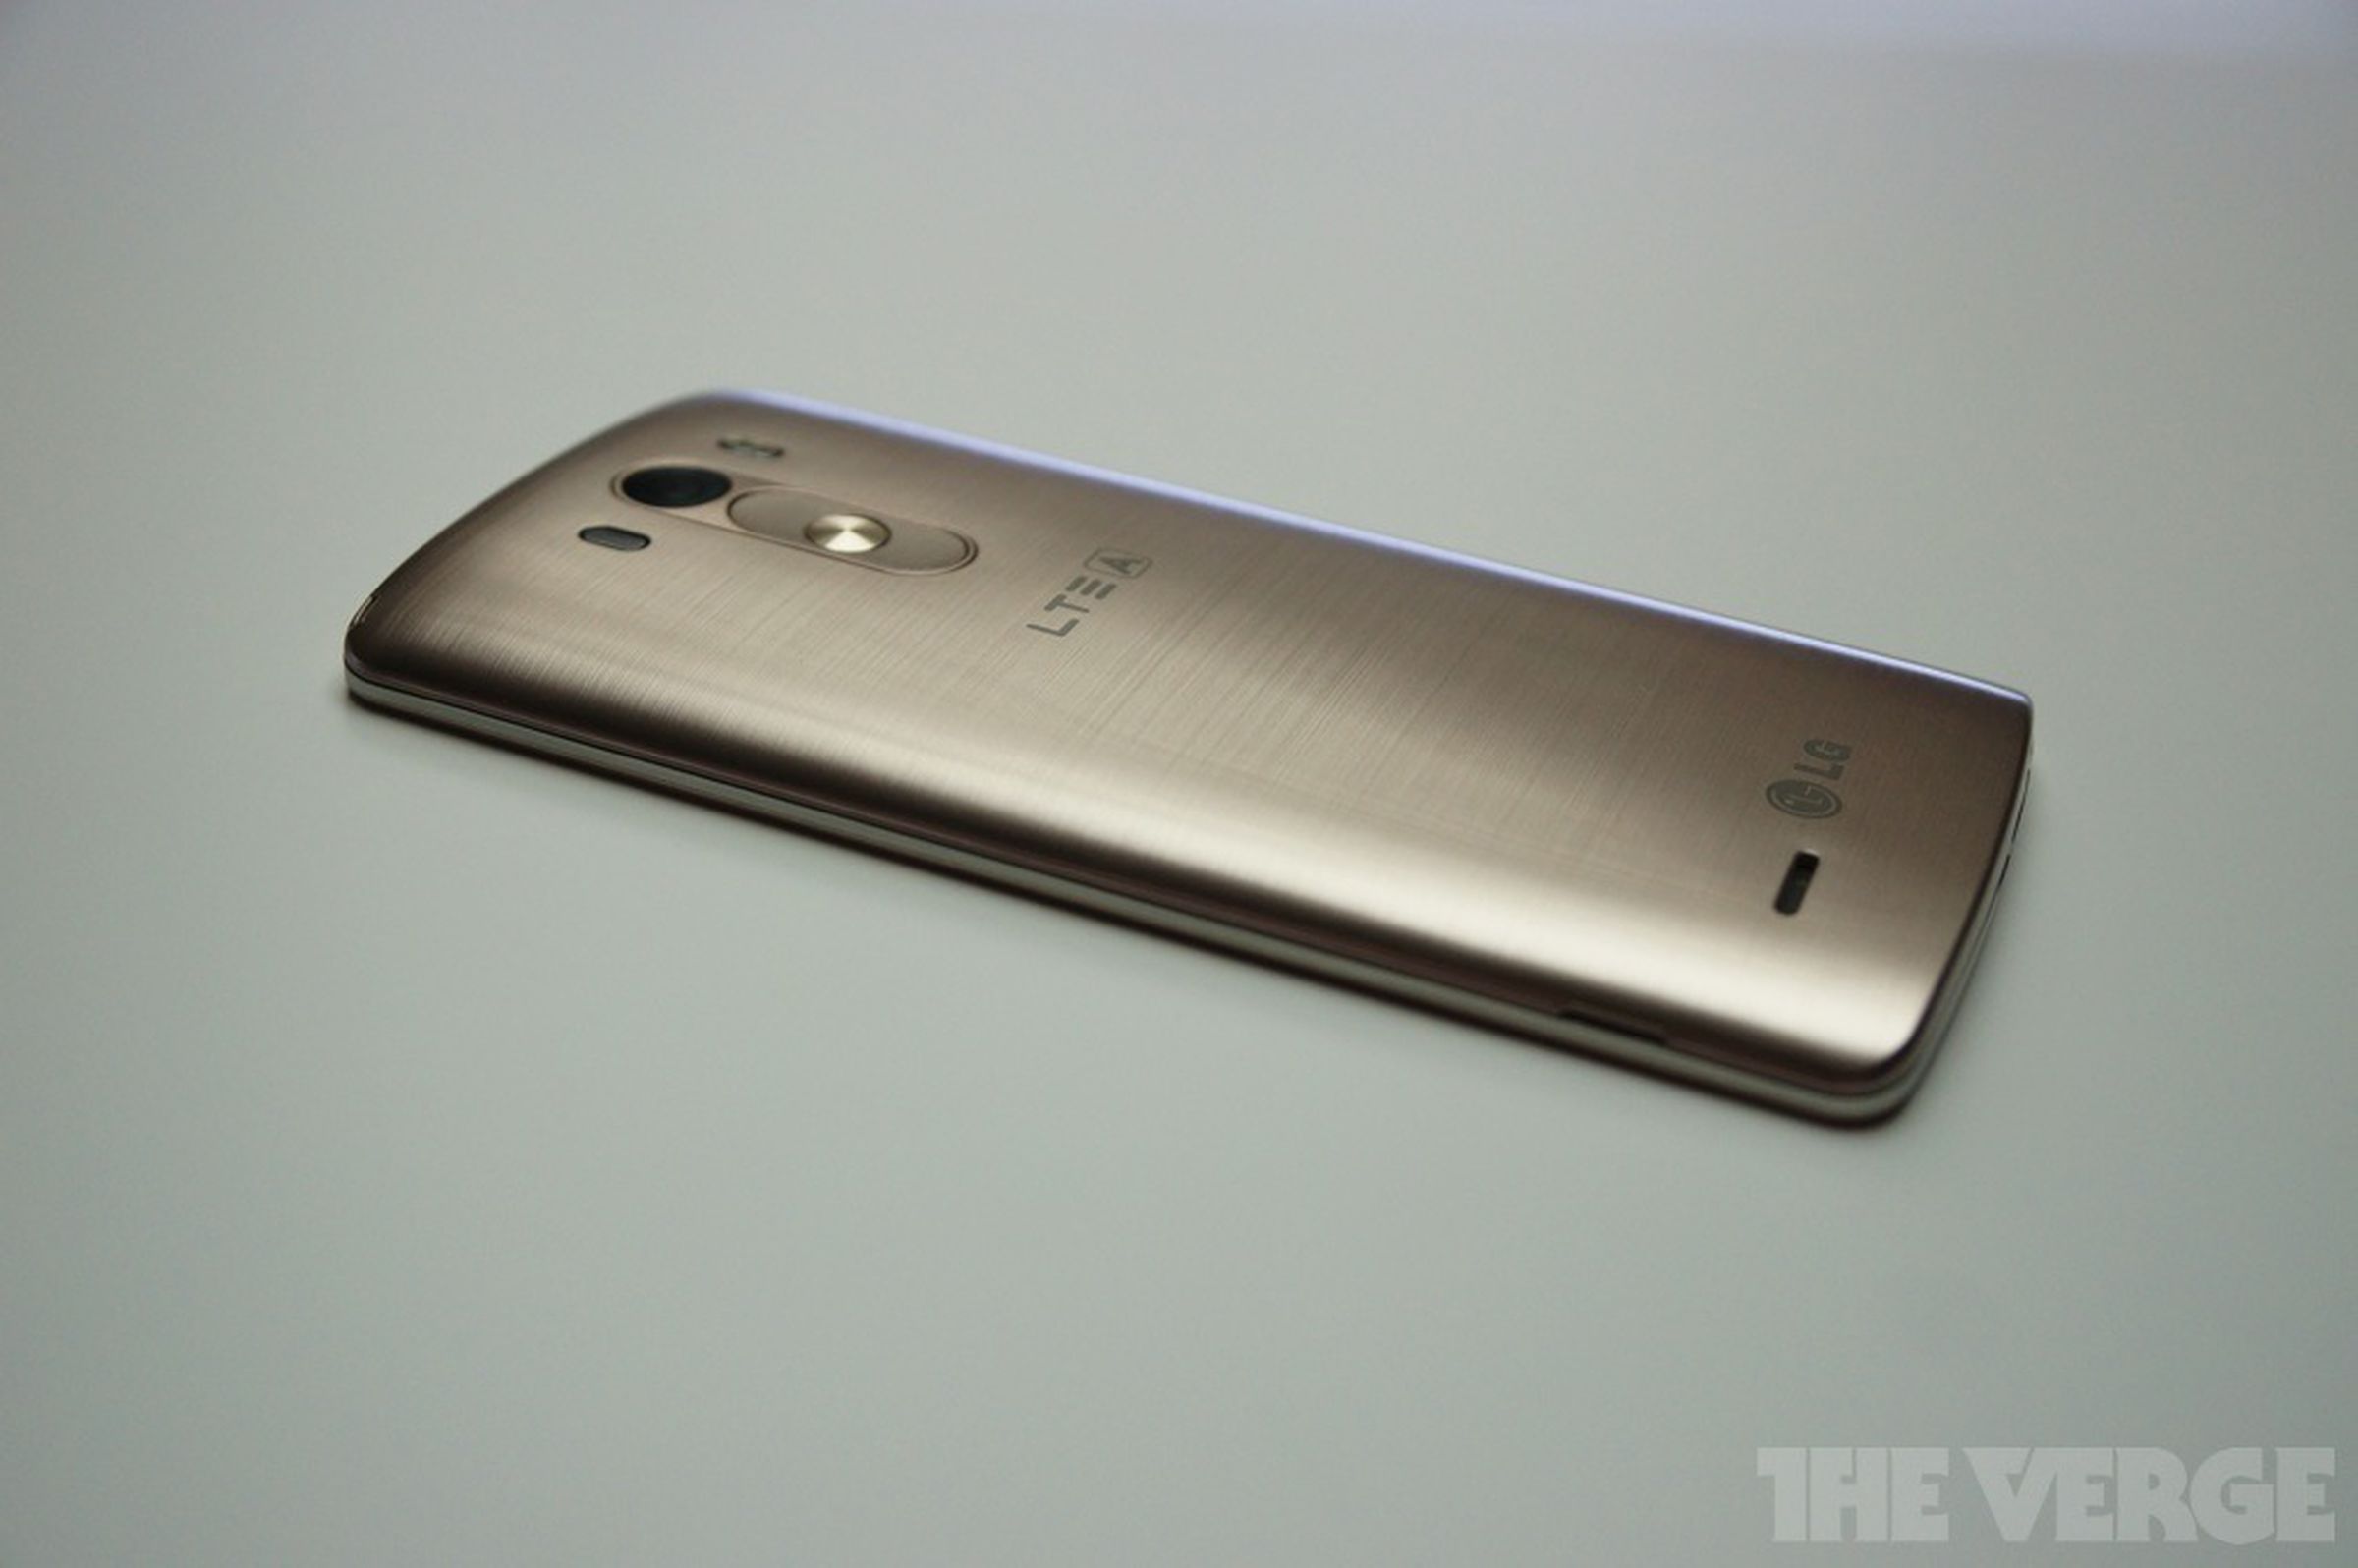 LG G3 hands-on photos